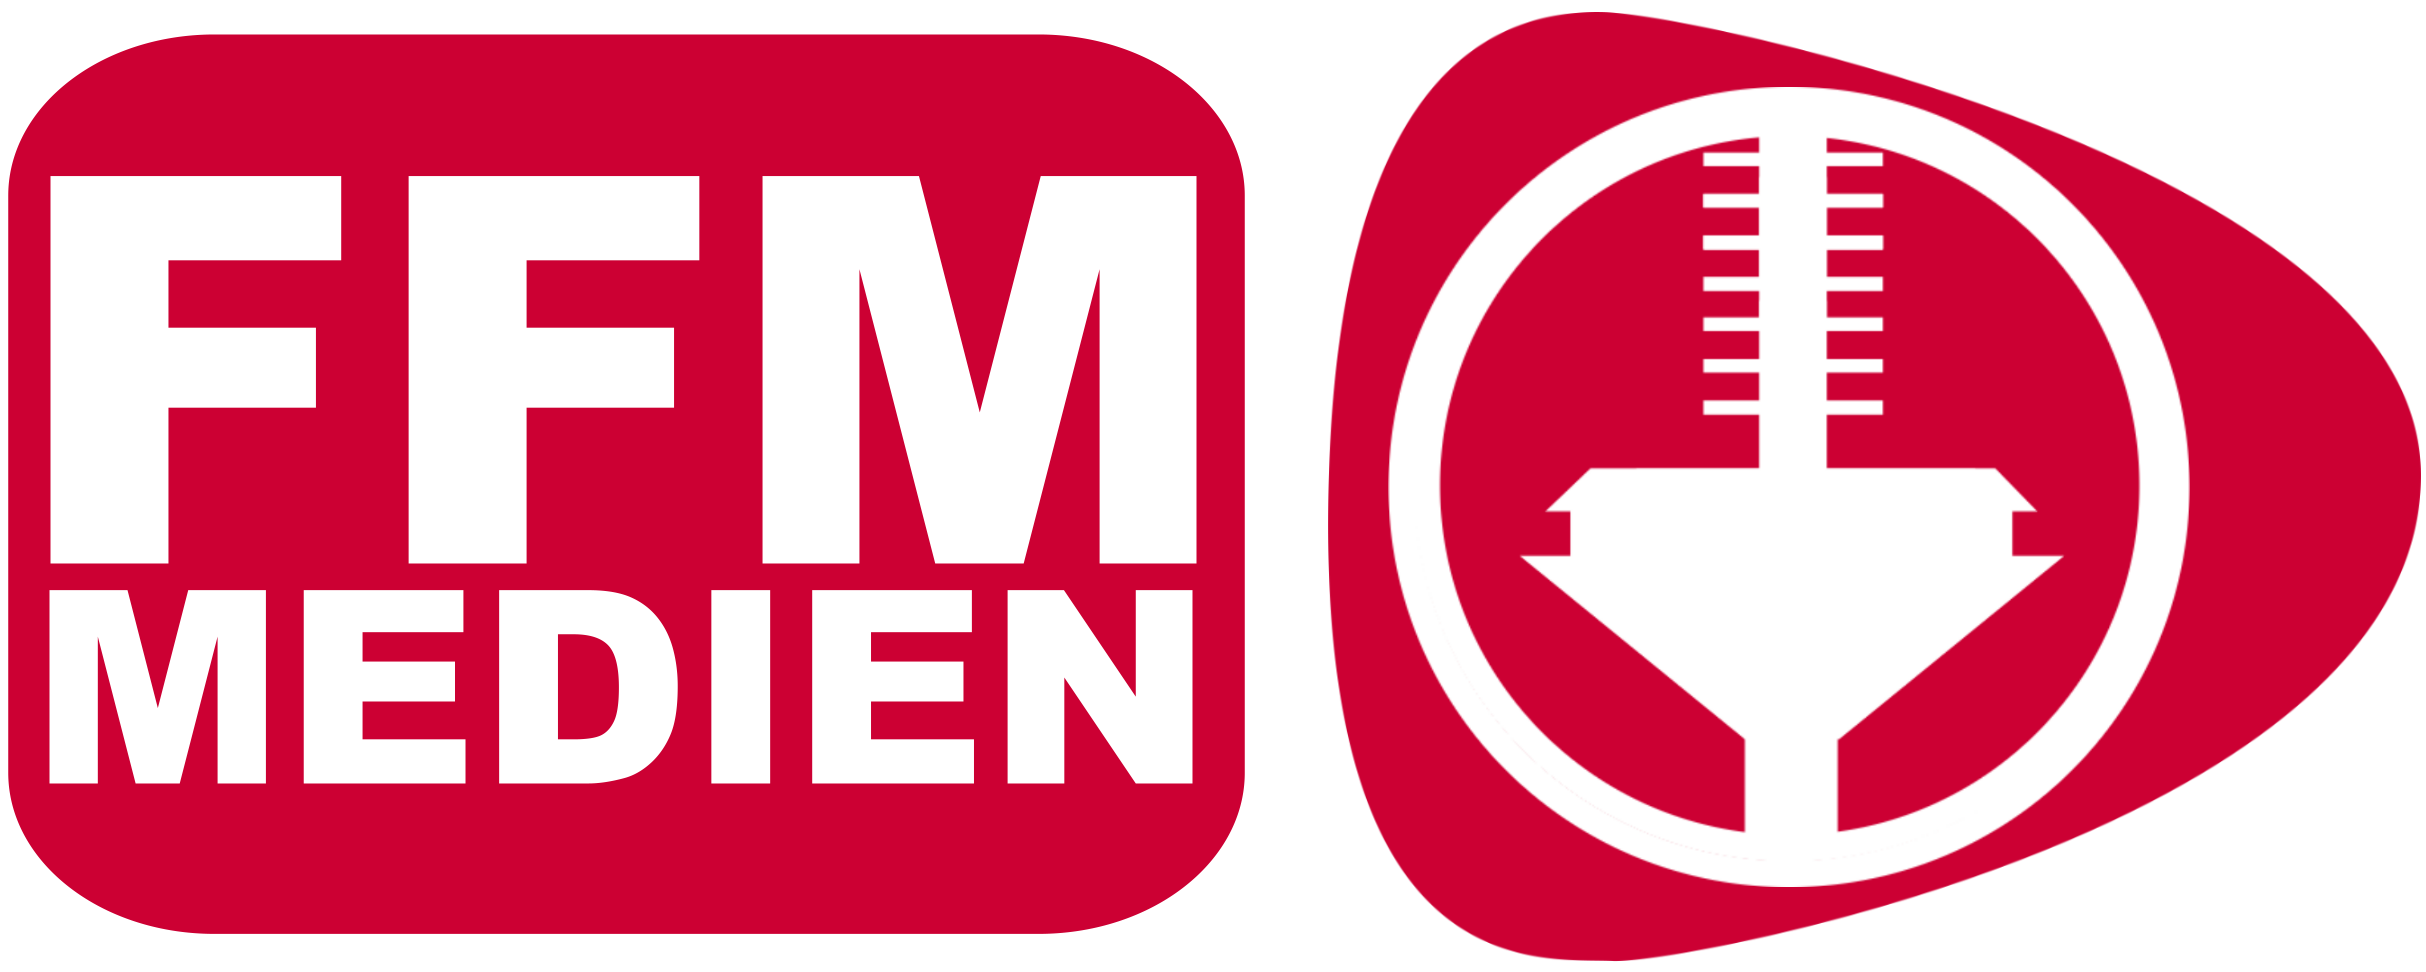 (c) Ffm-medien.de